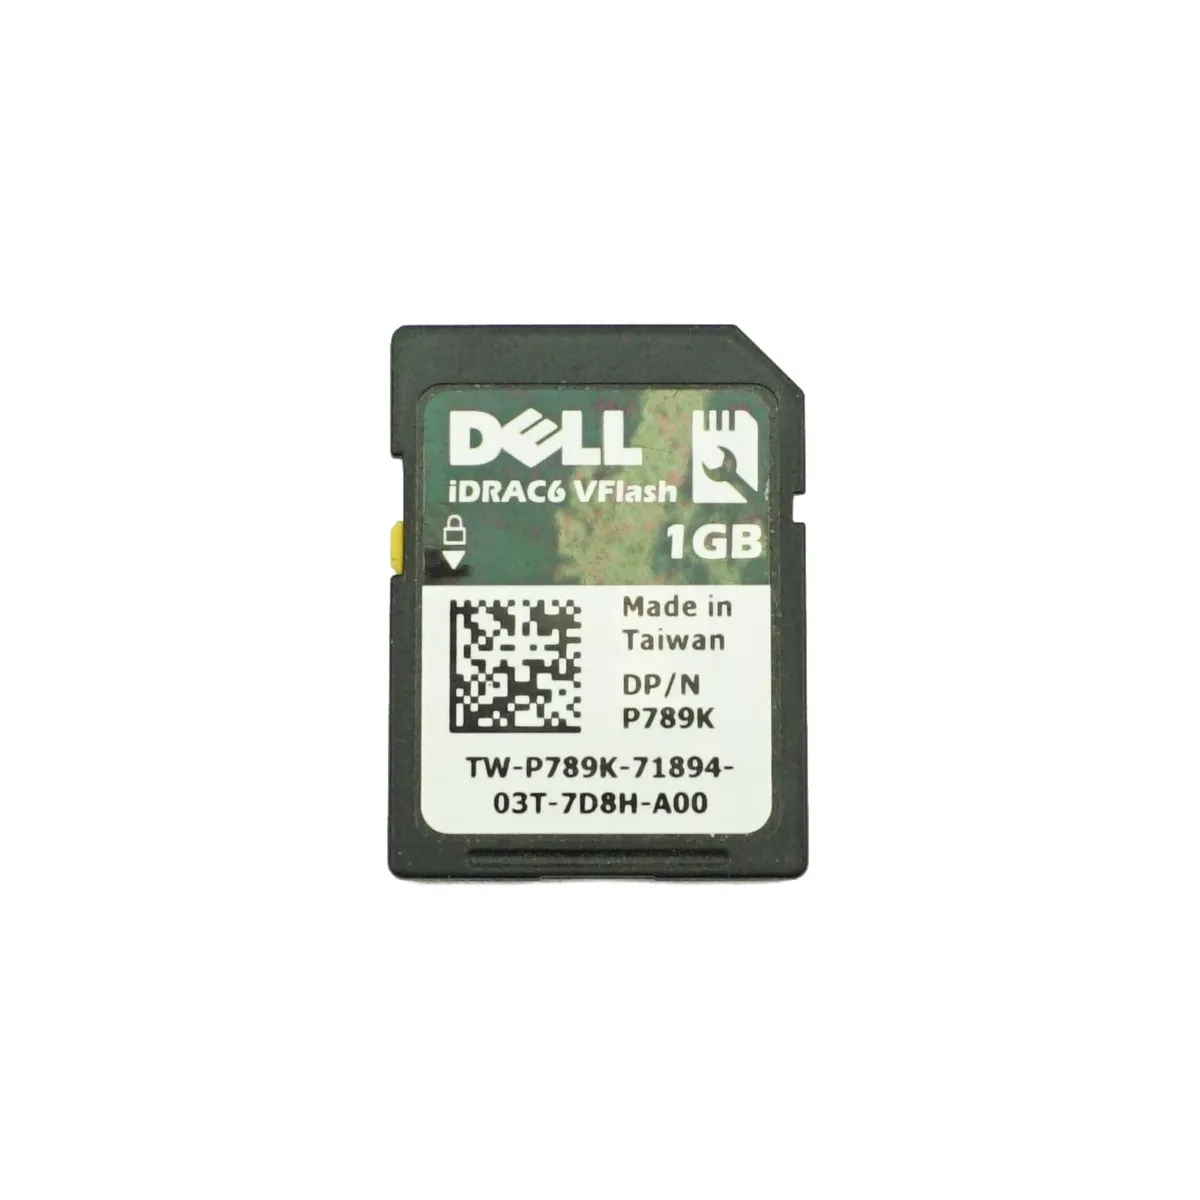 Dell iDRAC6 vFlash SD Card 1GB